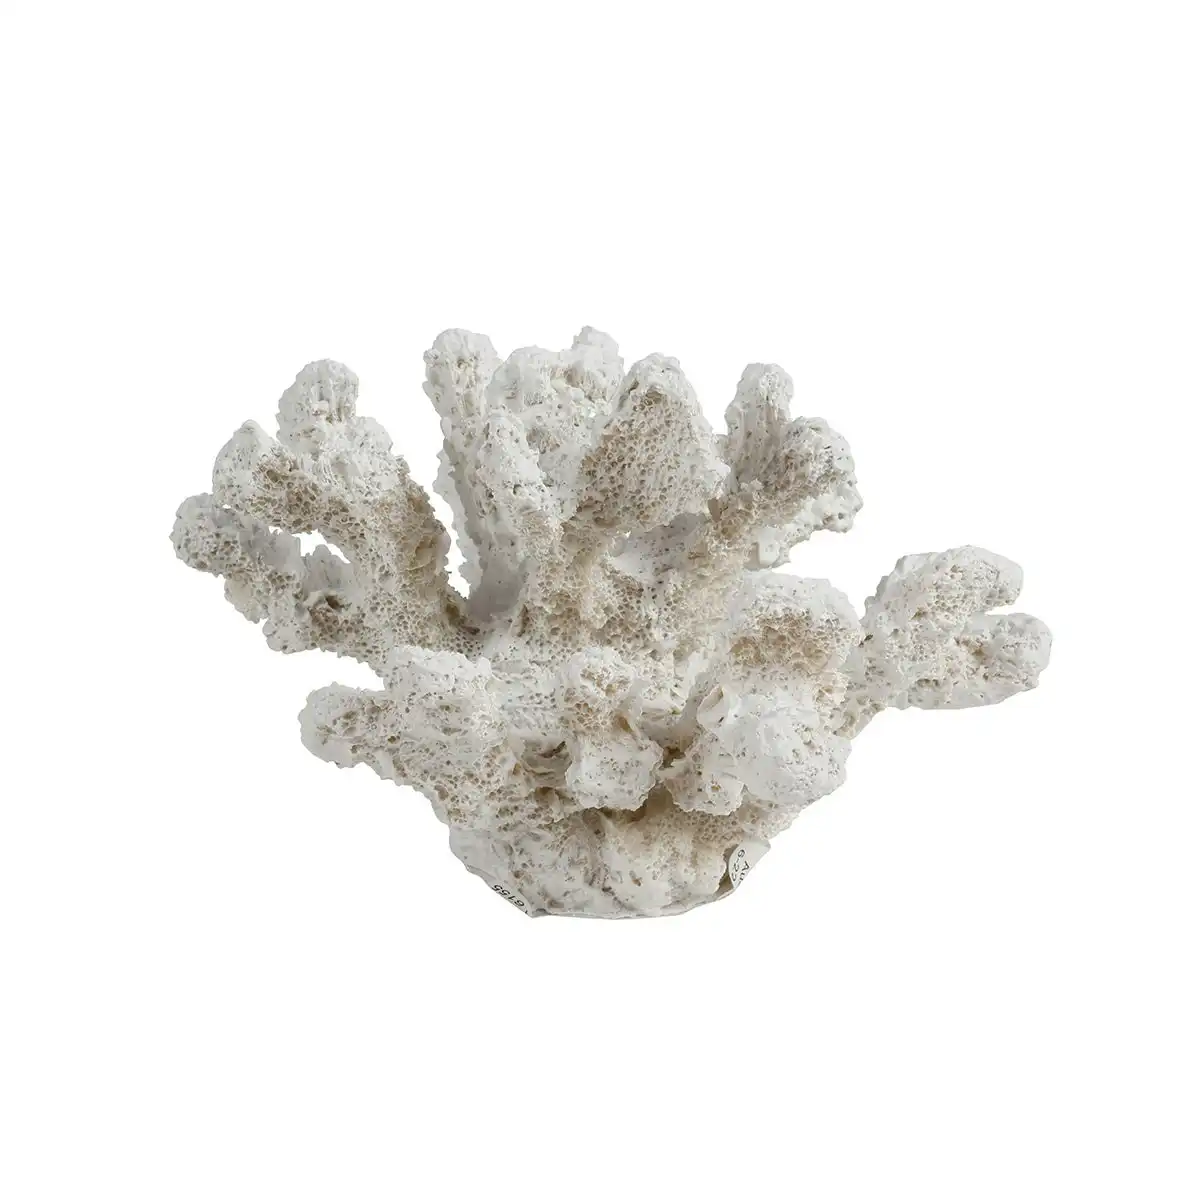 Resin Coral White 13 x 11 x 9cm